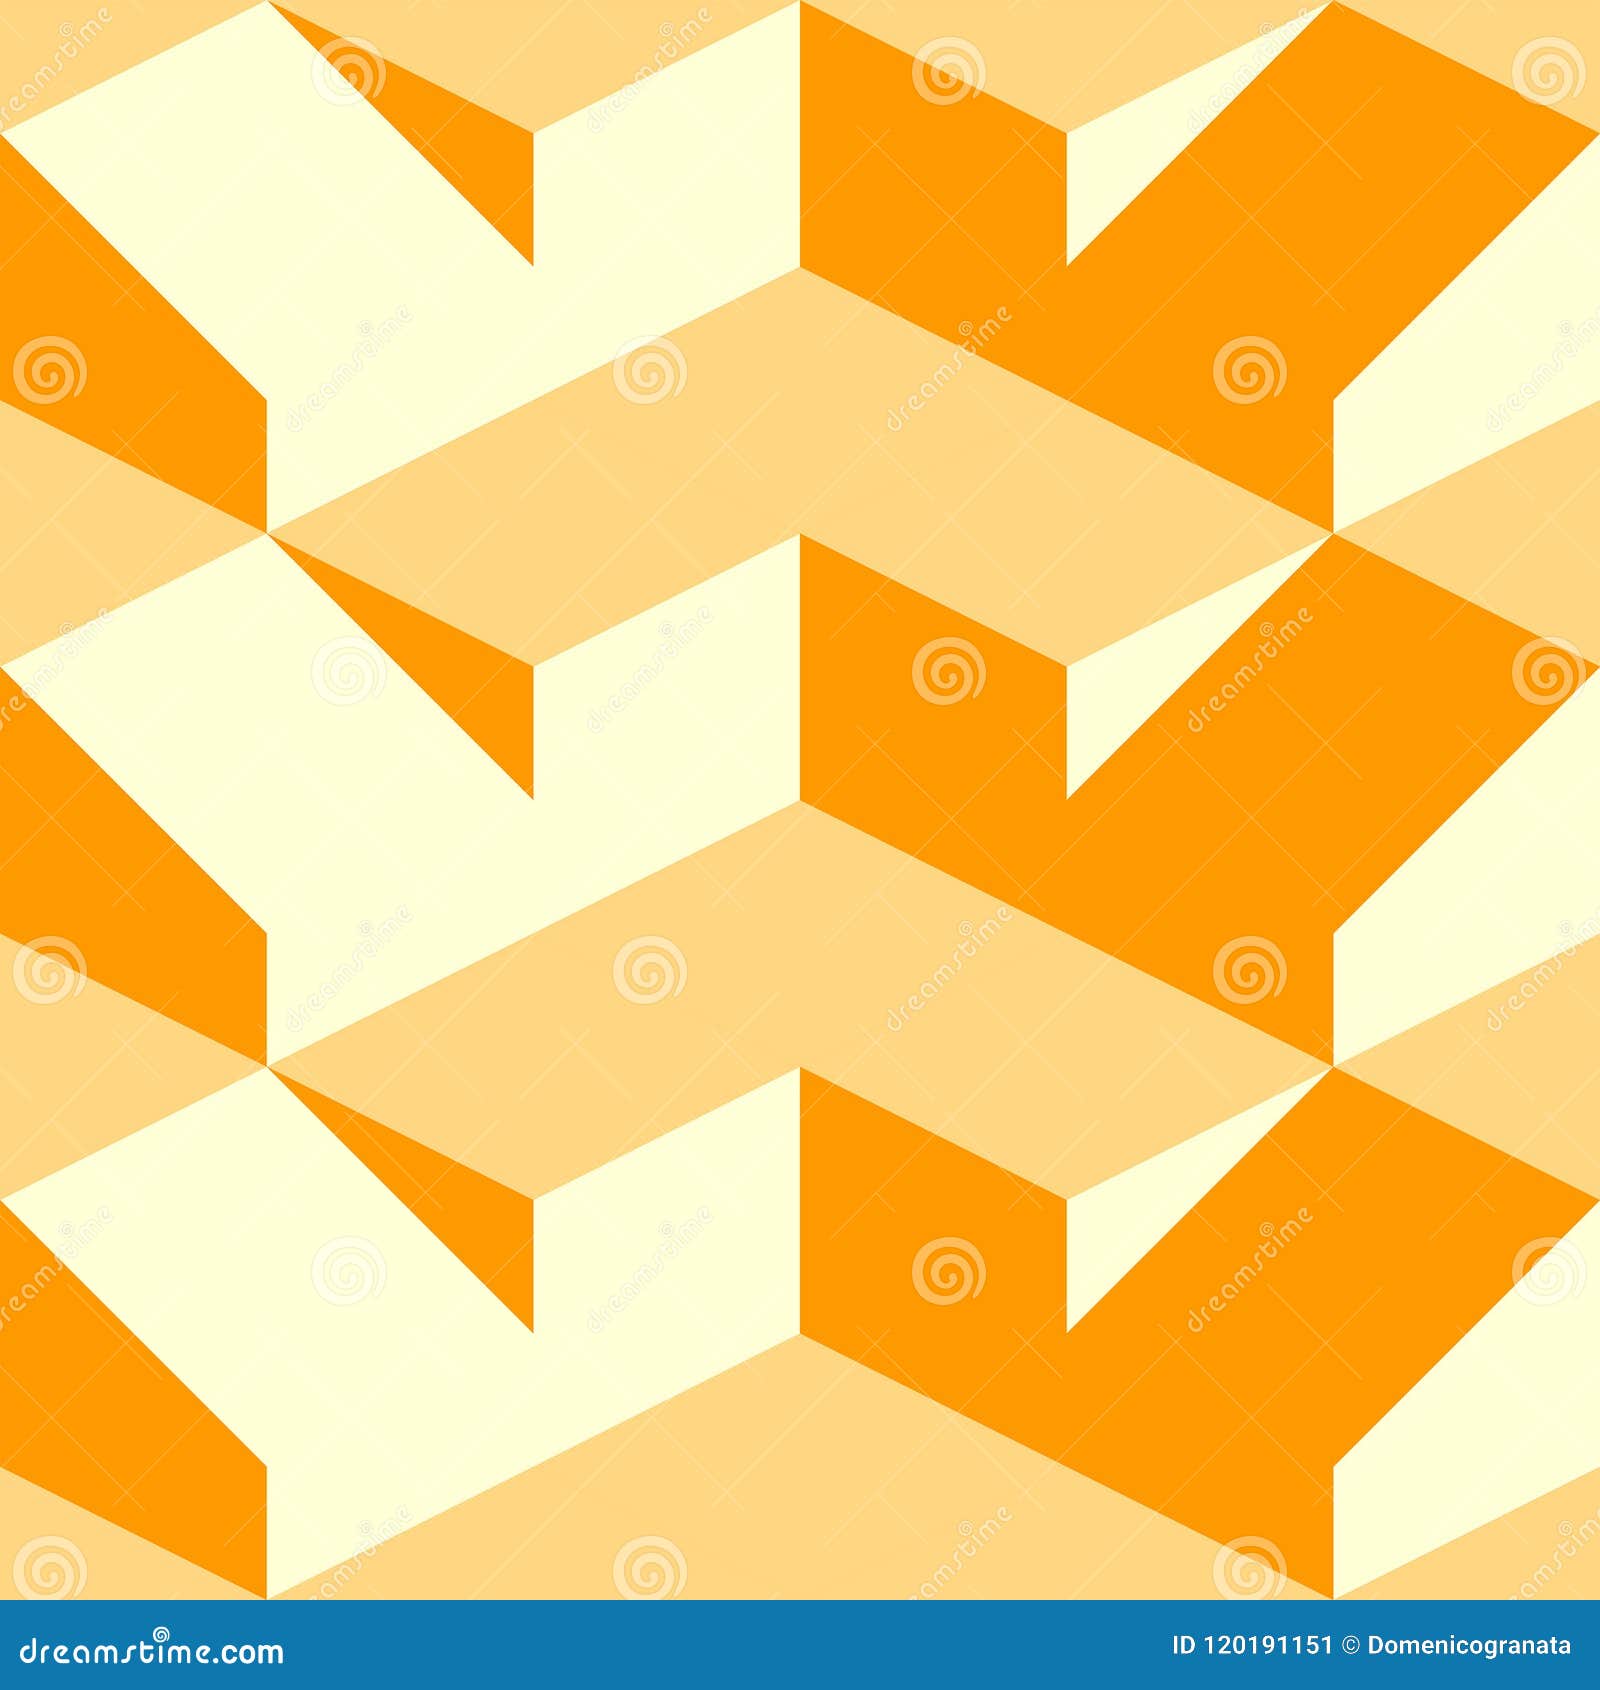 geometric pattern for tiles